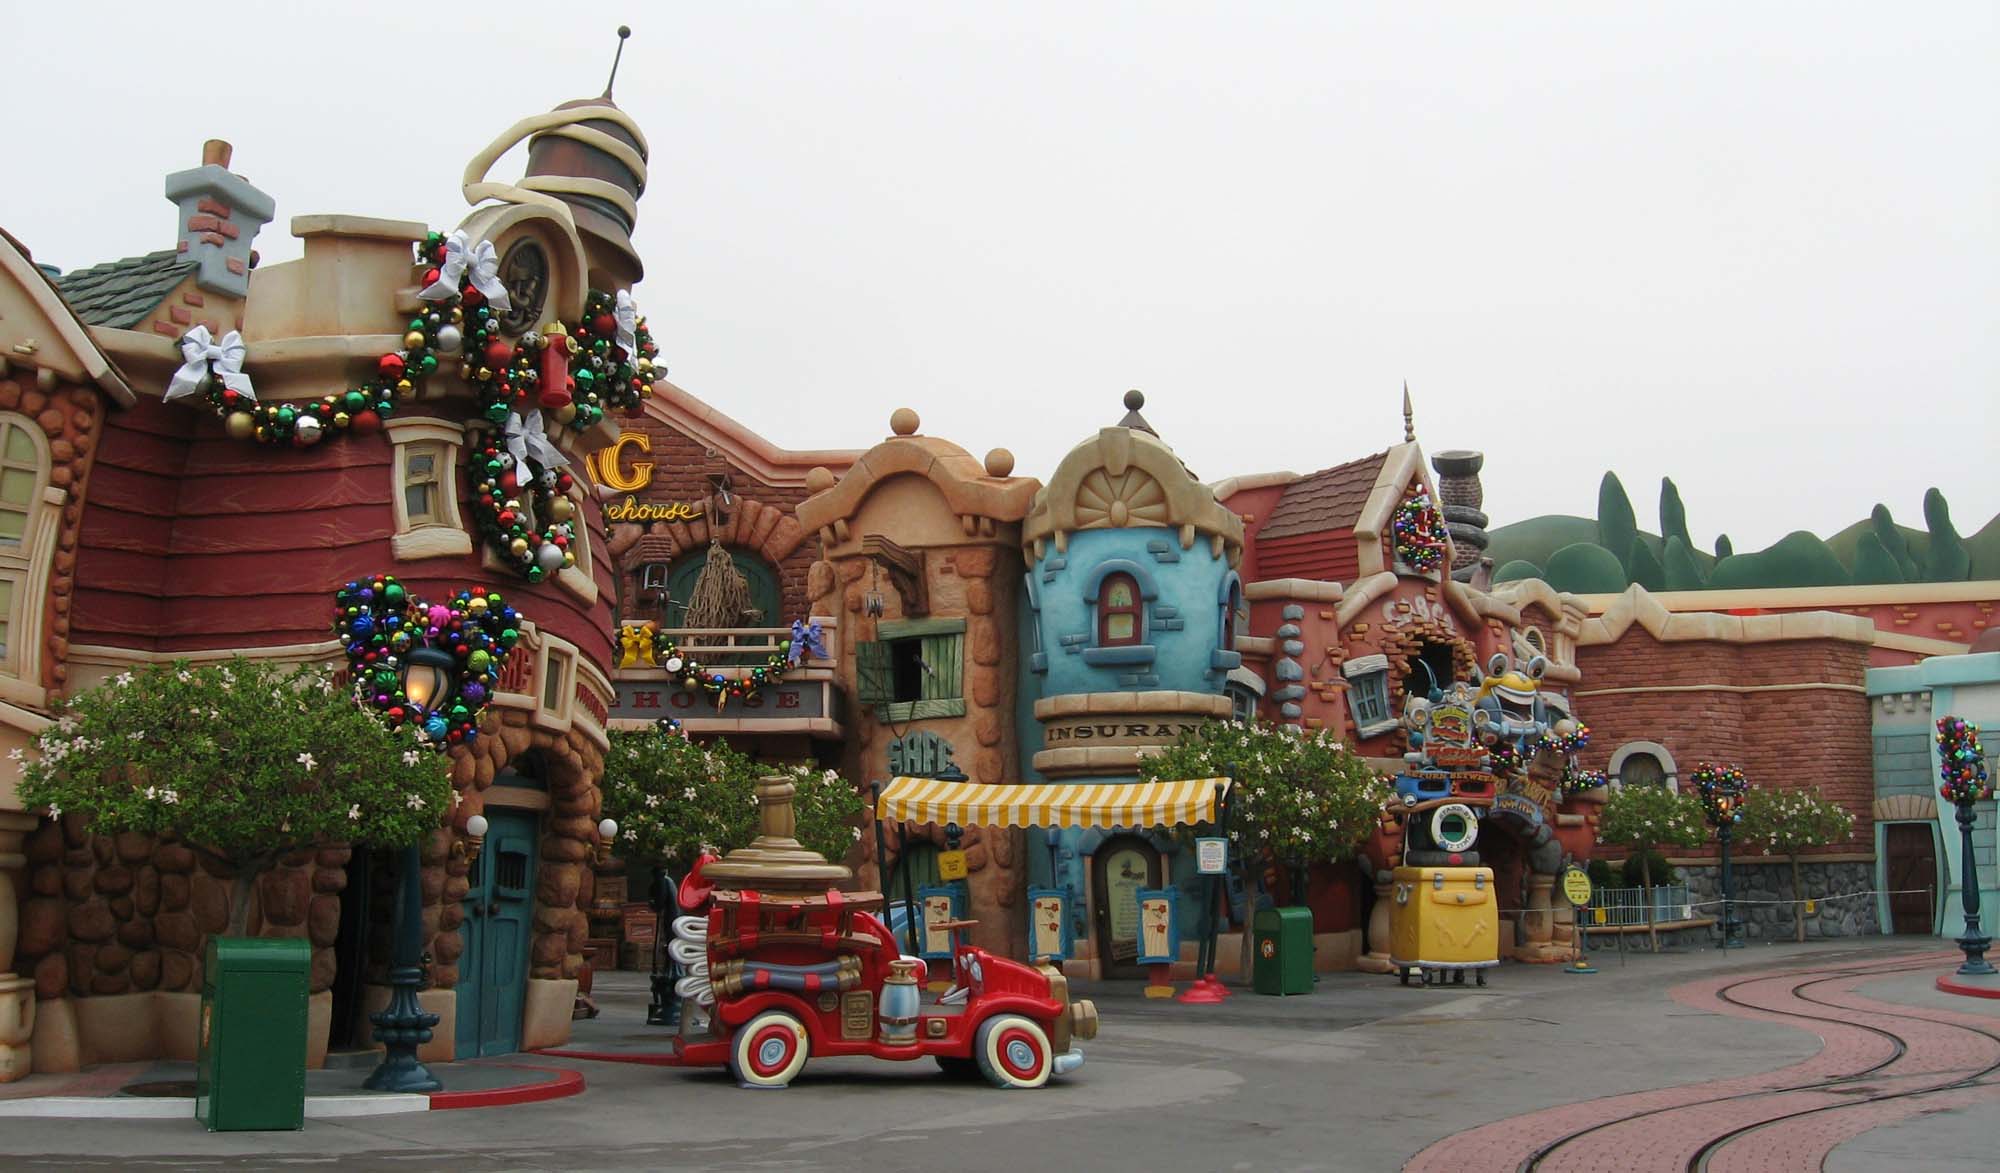 Disneyland - Toontown at Christmas